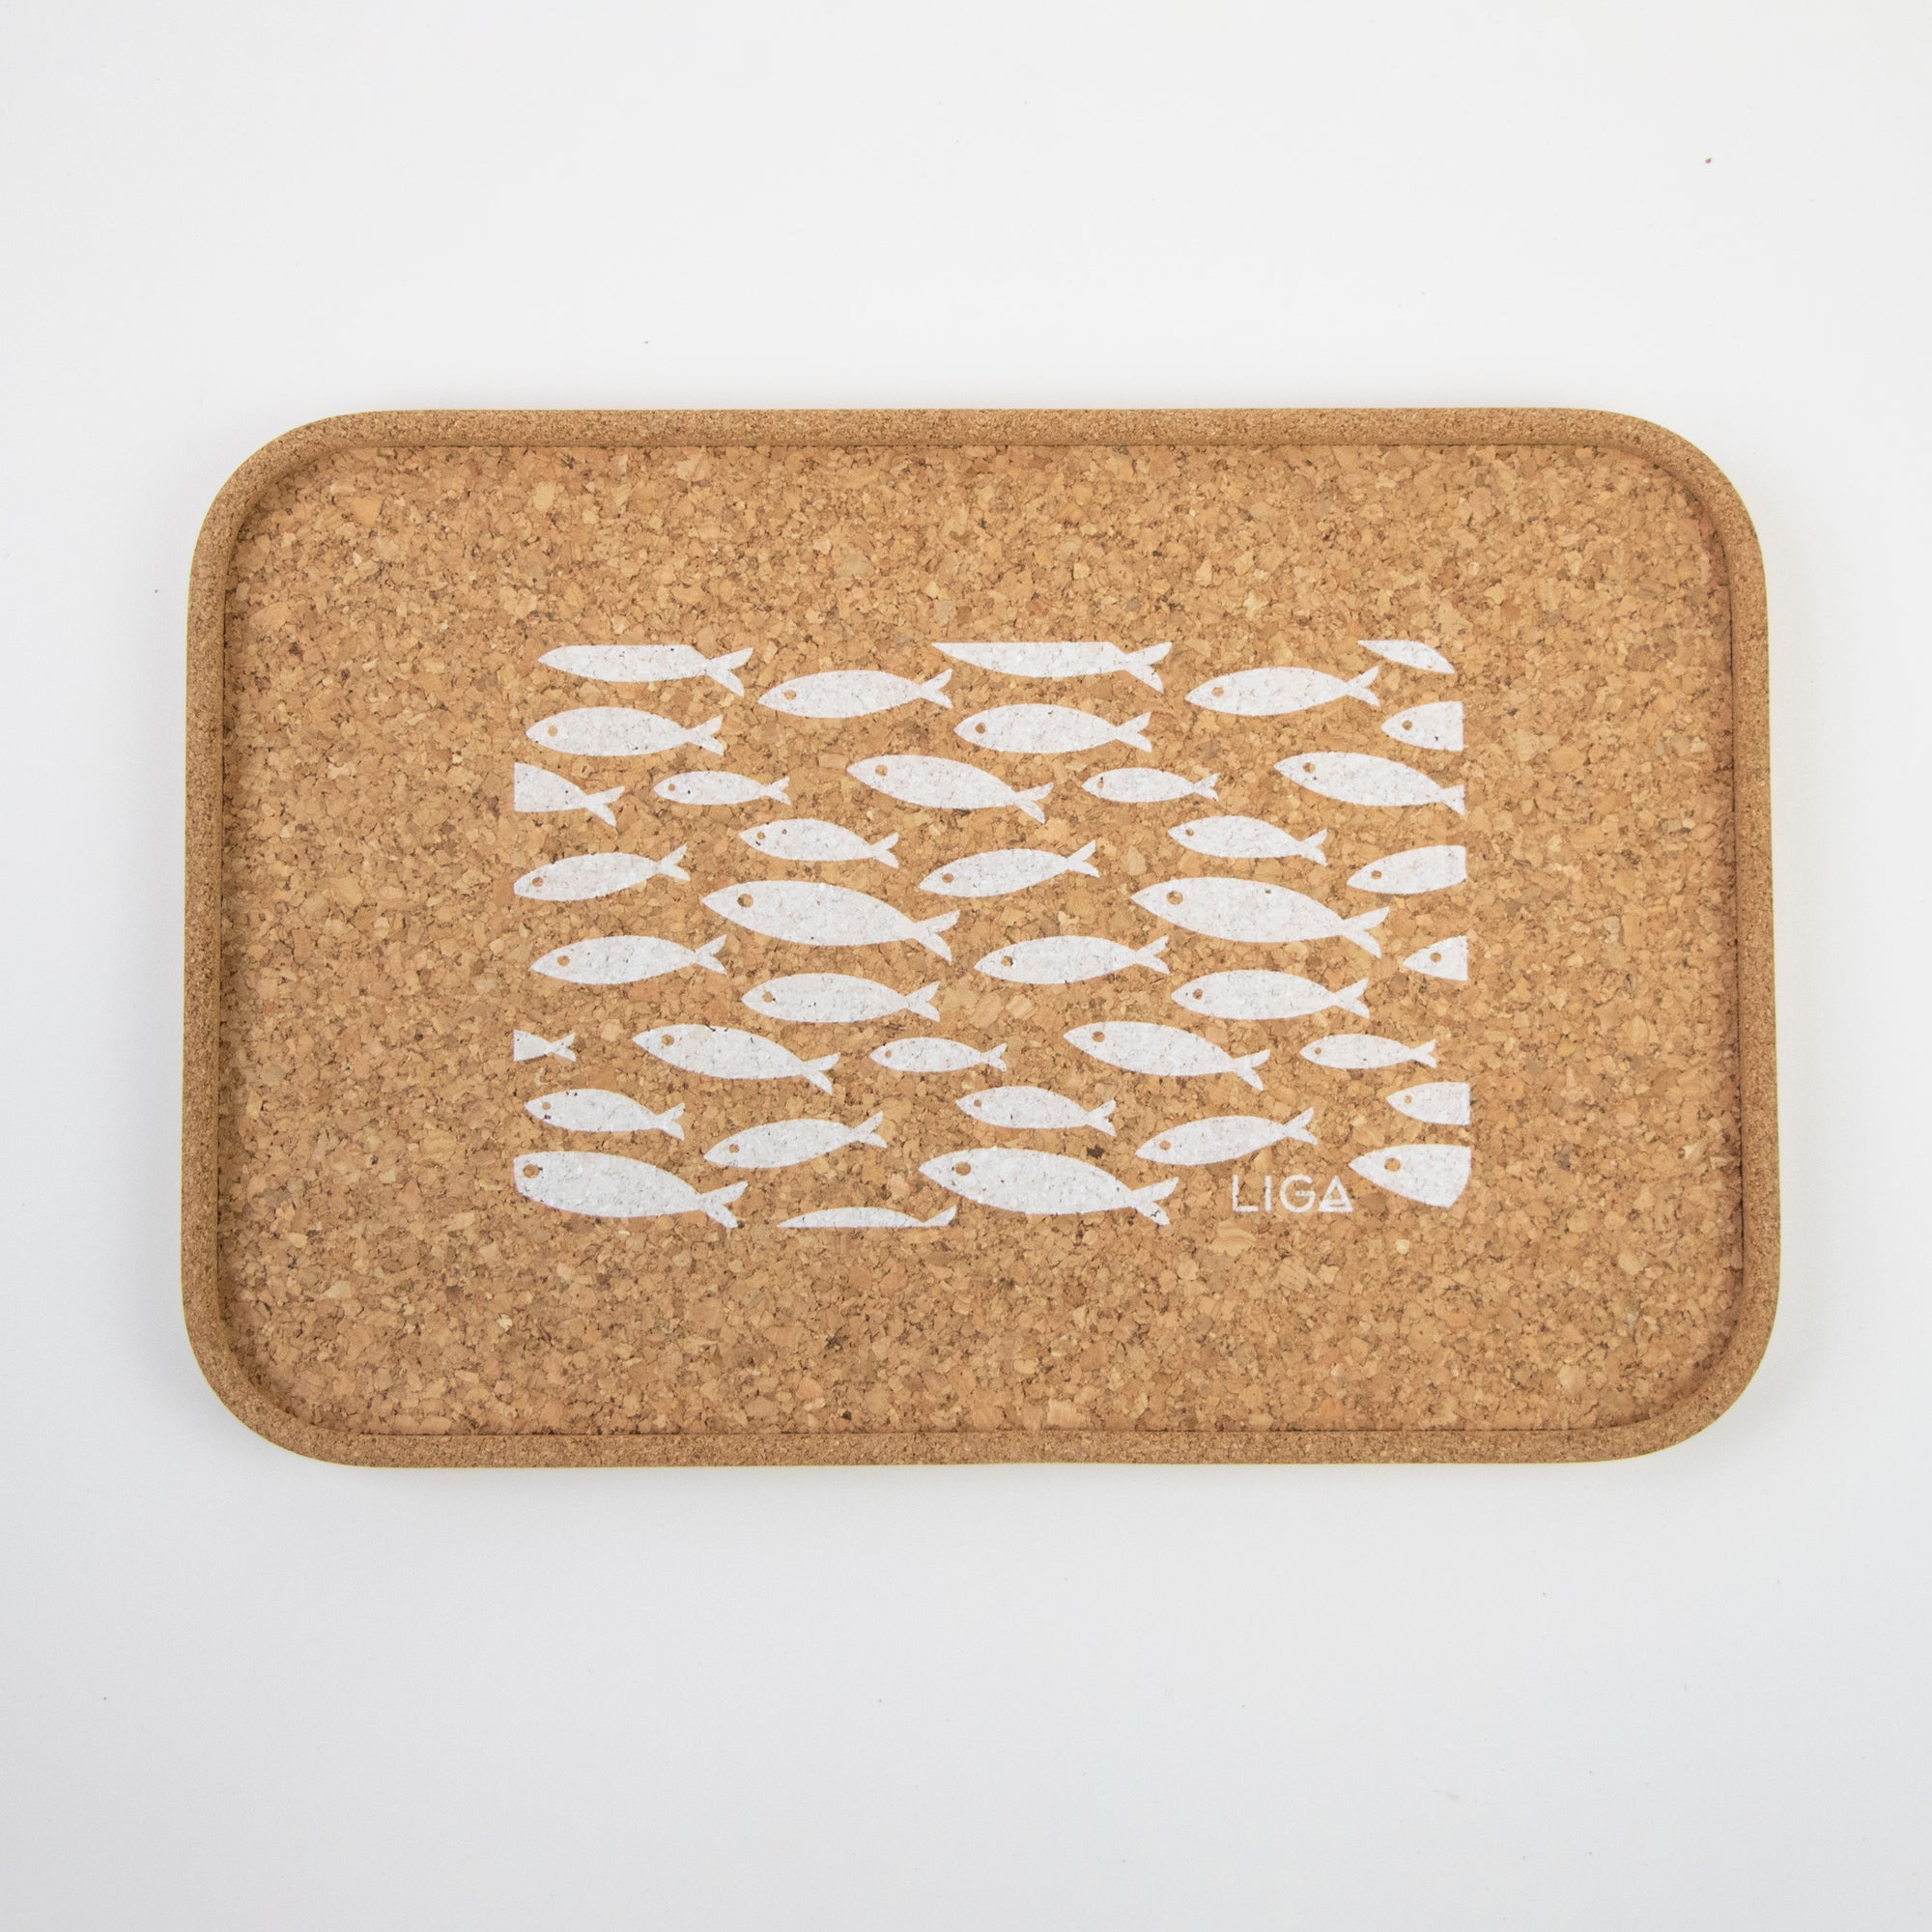 Sustainable cork tray. Fish